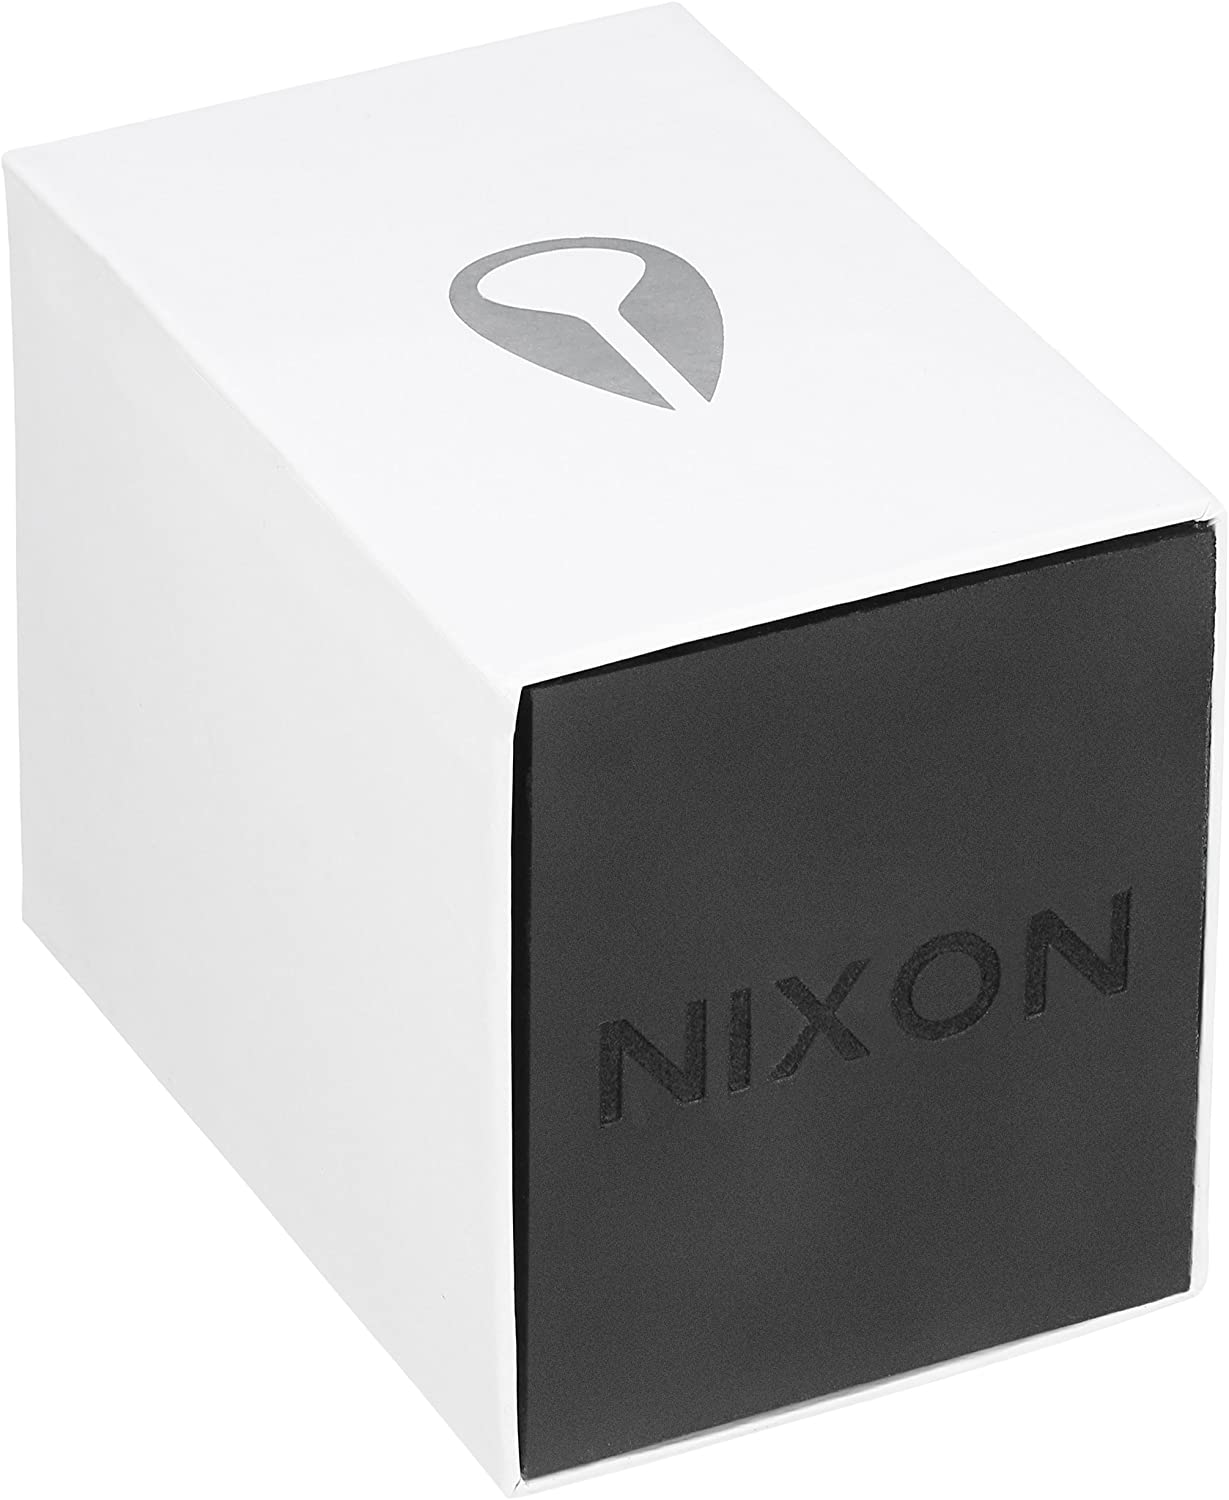 Nixon Men's '46, All' Quartz Stainless Steel Watch, Color:Black (Model: A916-001-00)